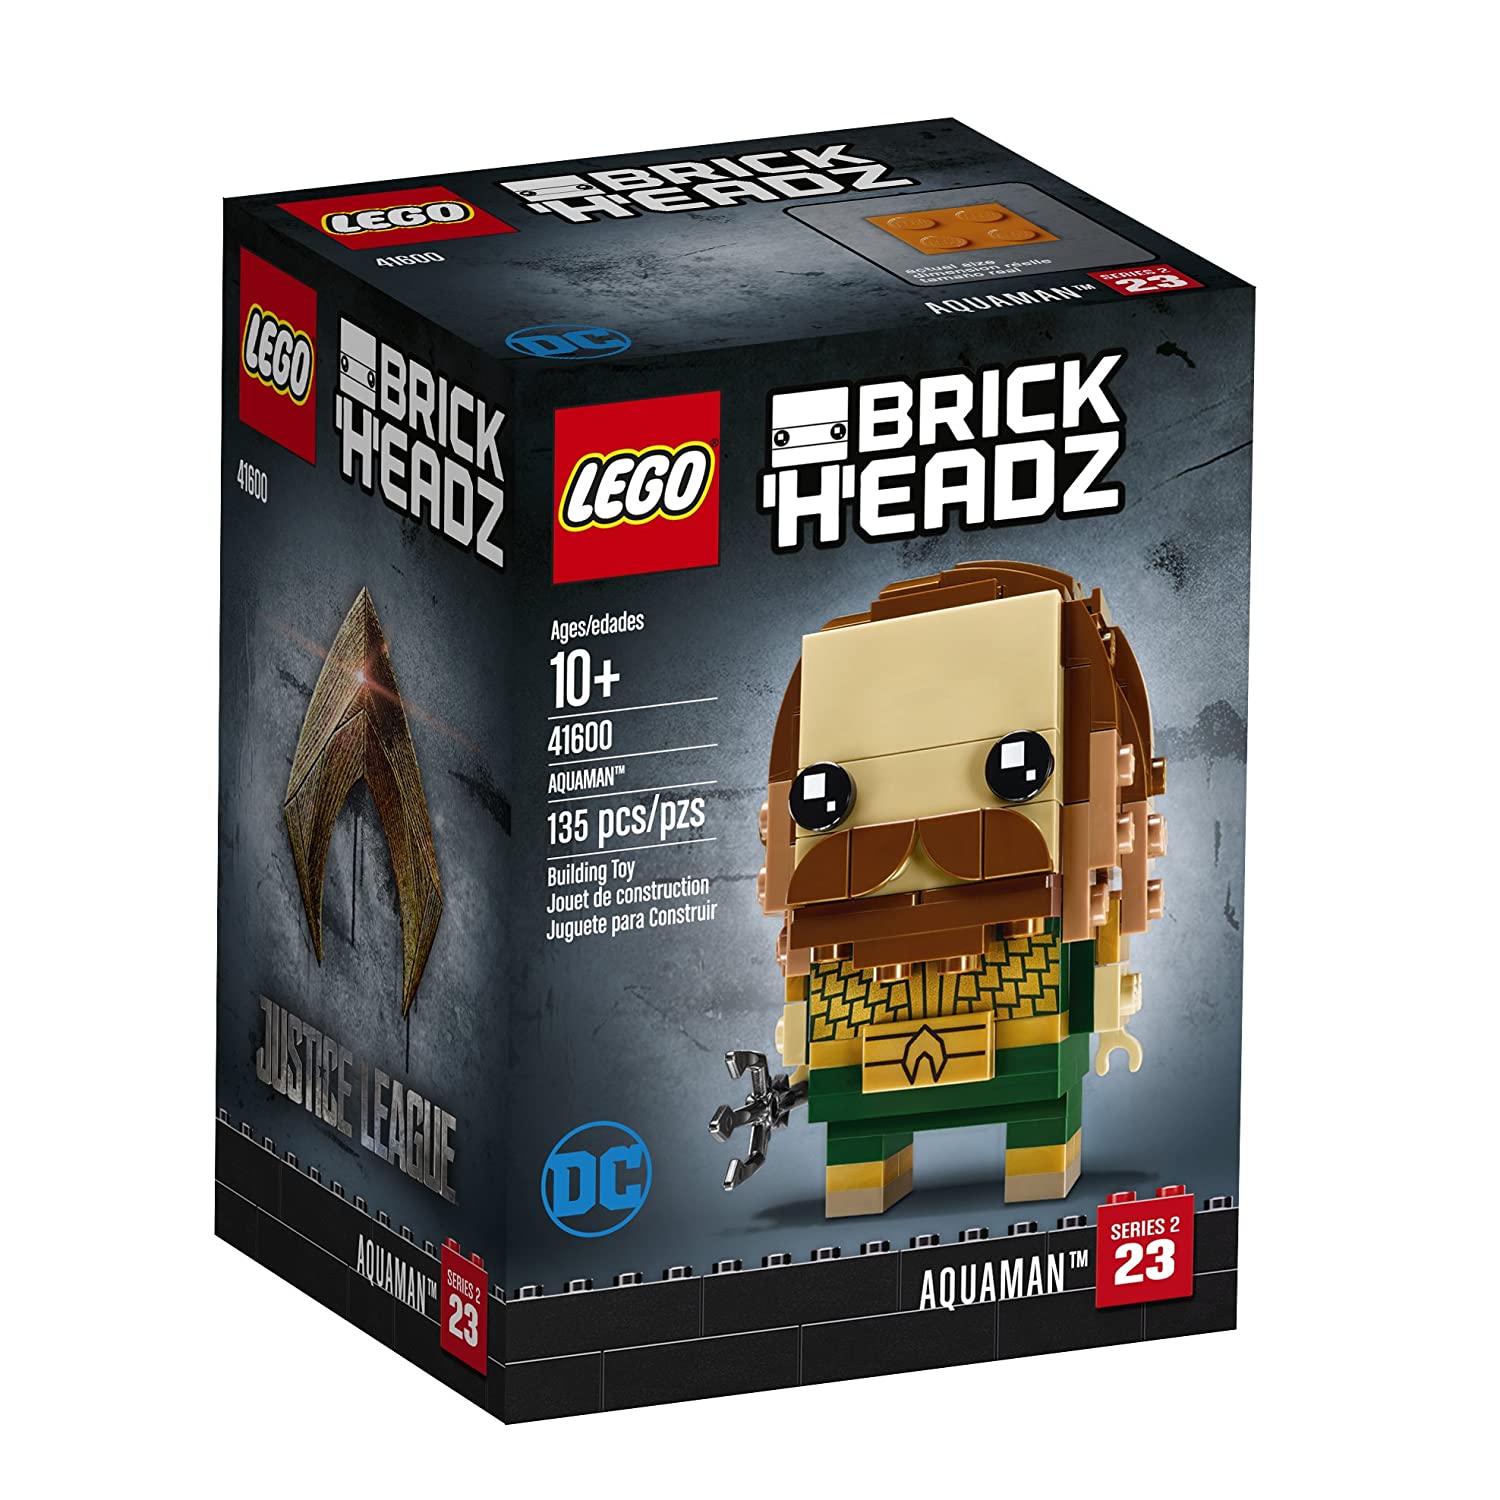 11 Best Lego Brickheadz 2023 - Buying Guide & Reviews 7